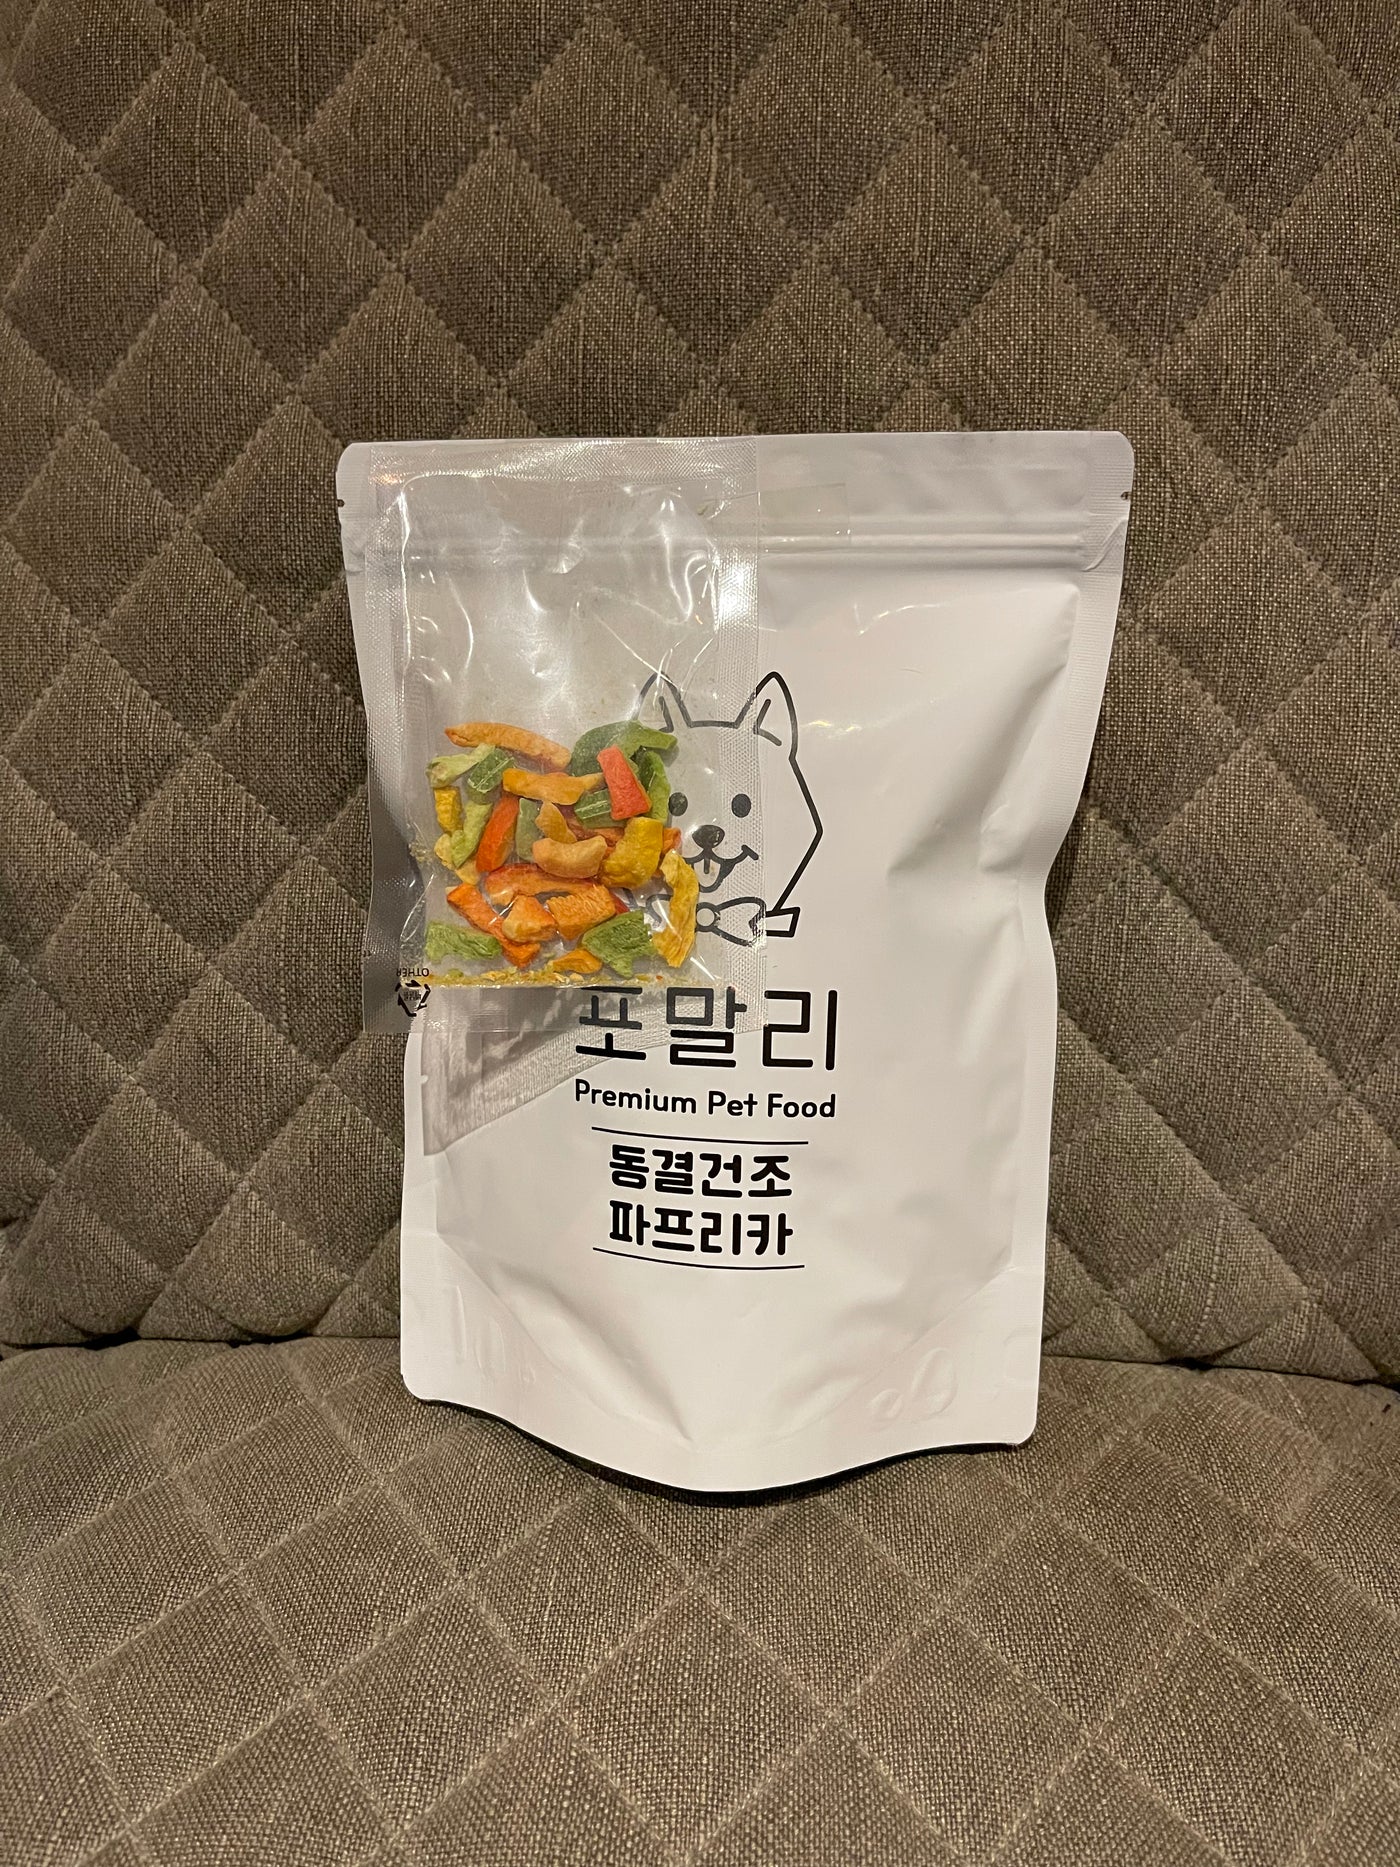 Premium Pet food | 韓國製狗狗涷乾三色椒小食 (預售)